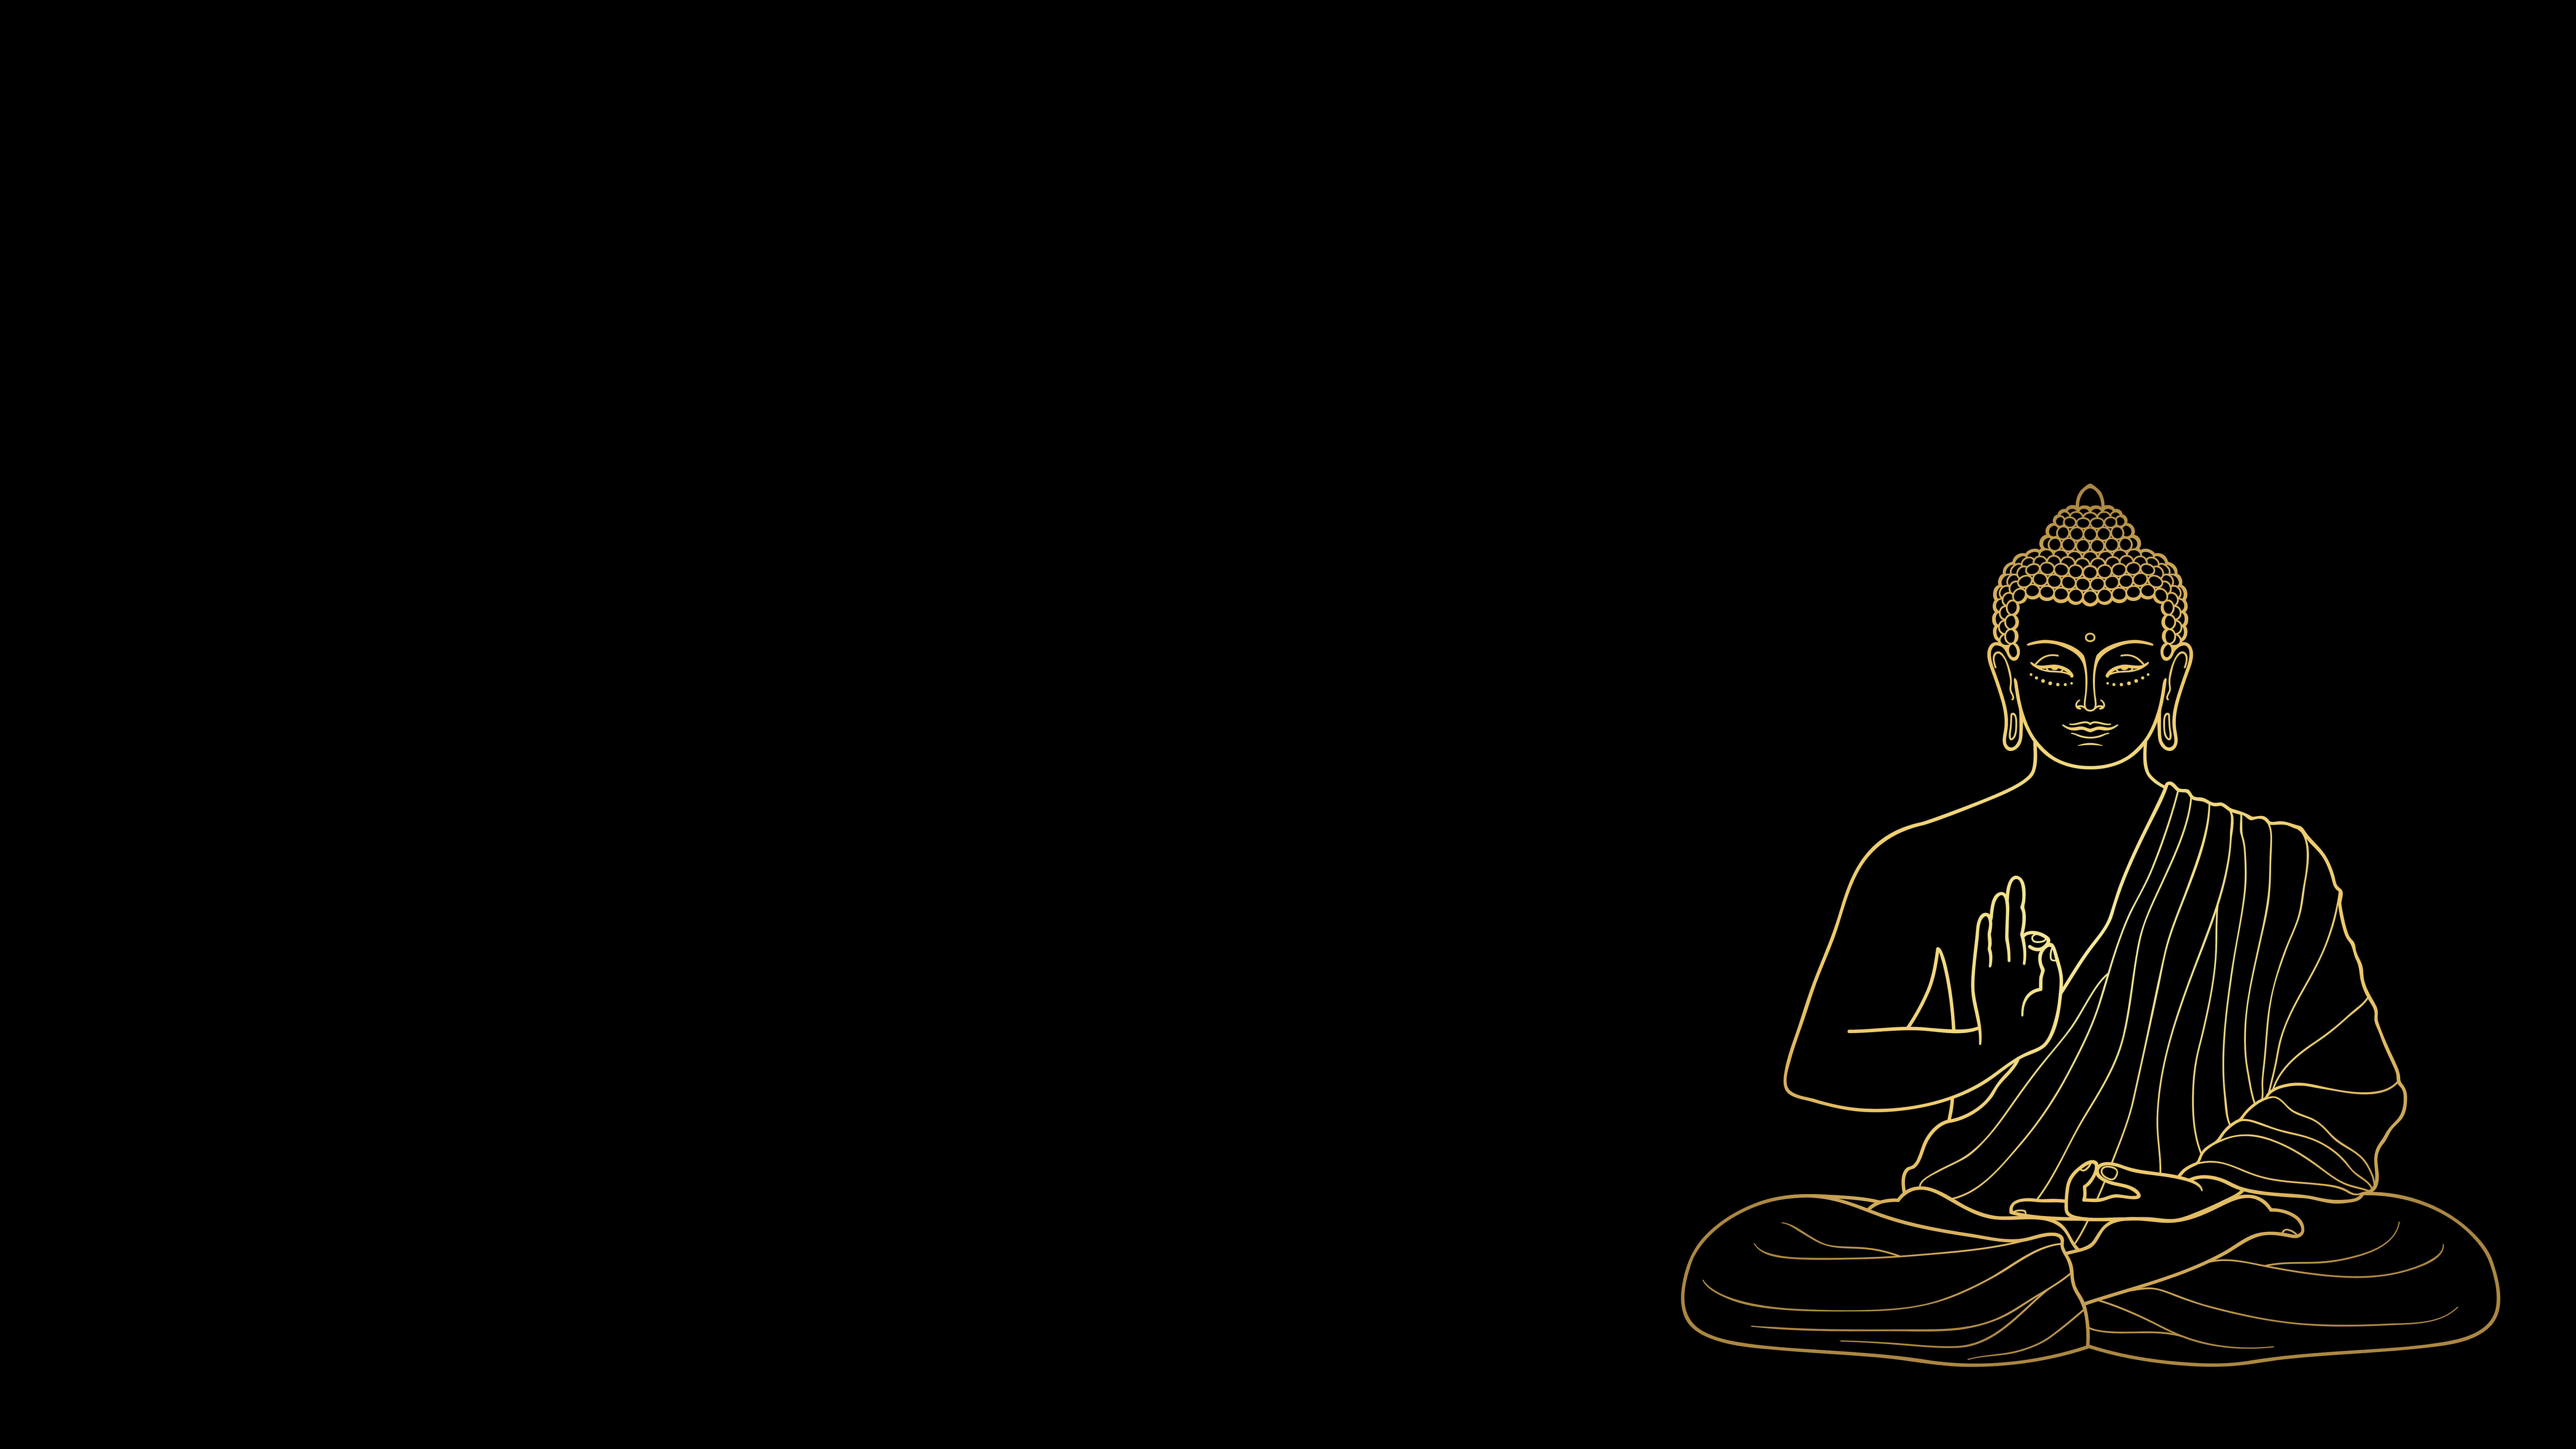 Black Buddha Desktop